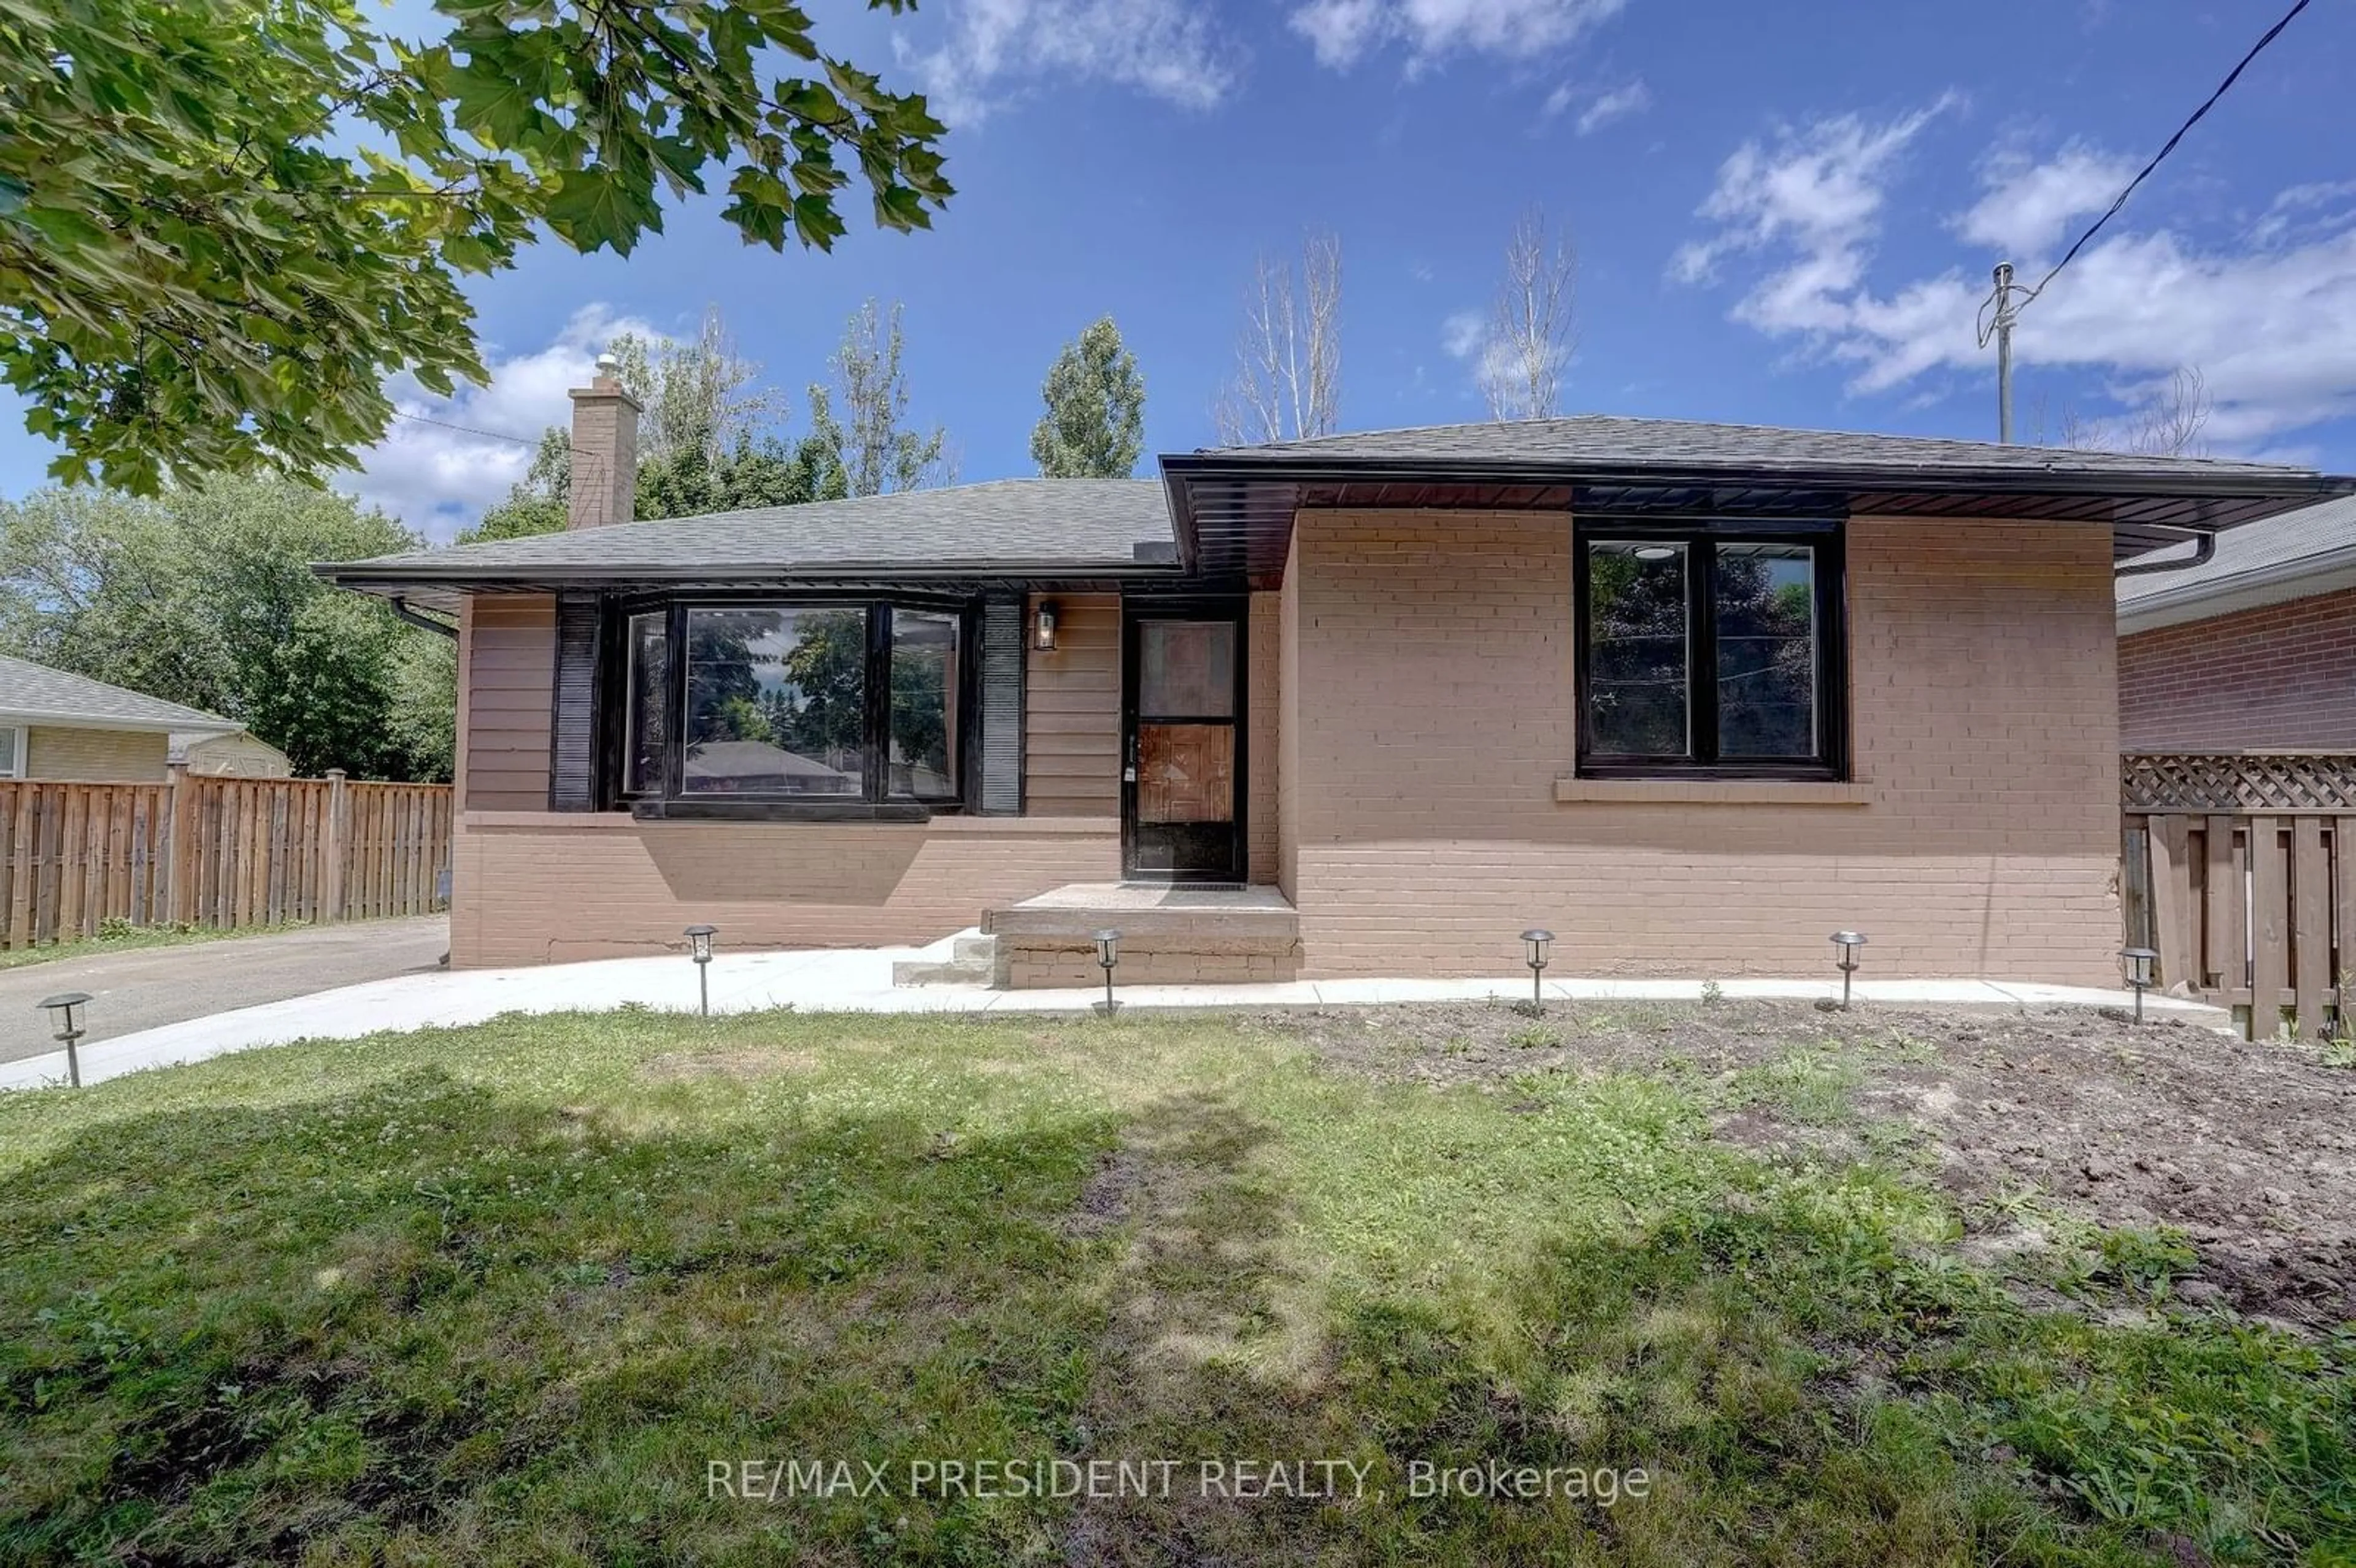 Home with brick exterior material for 26 Mackenzie Dr, Halton Hills Ontario L7G 4B9